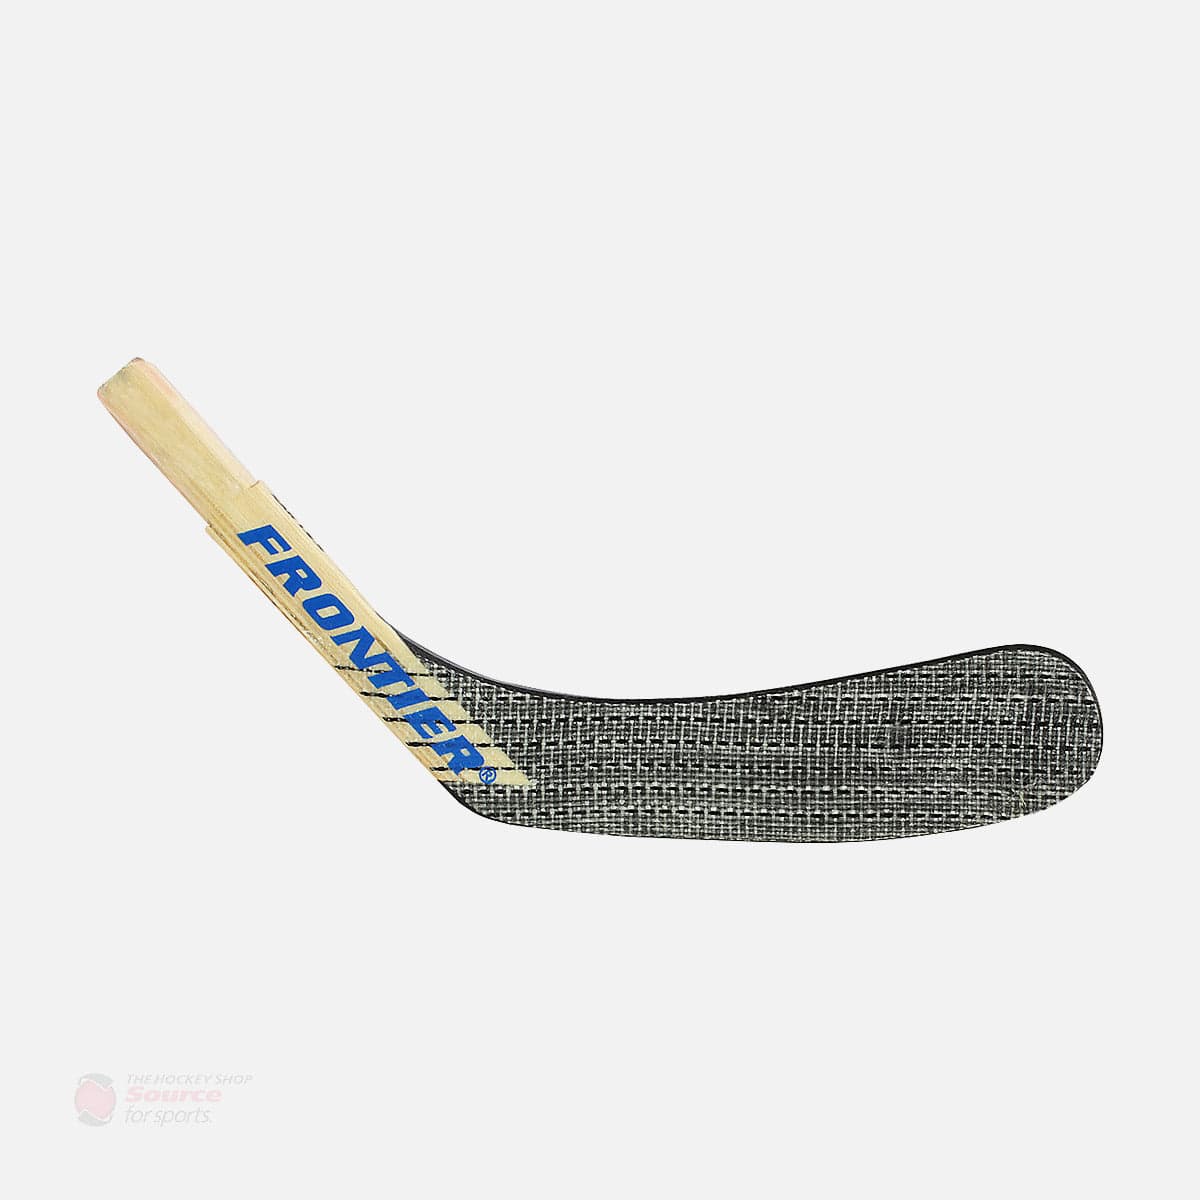 Frontier F-Blue ABS Standard Senior Wood Hockey Blade